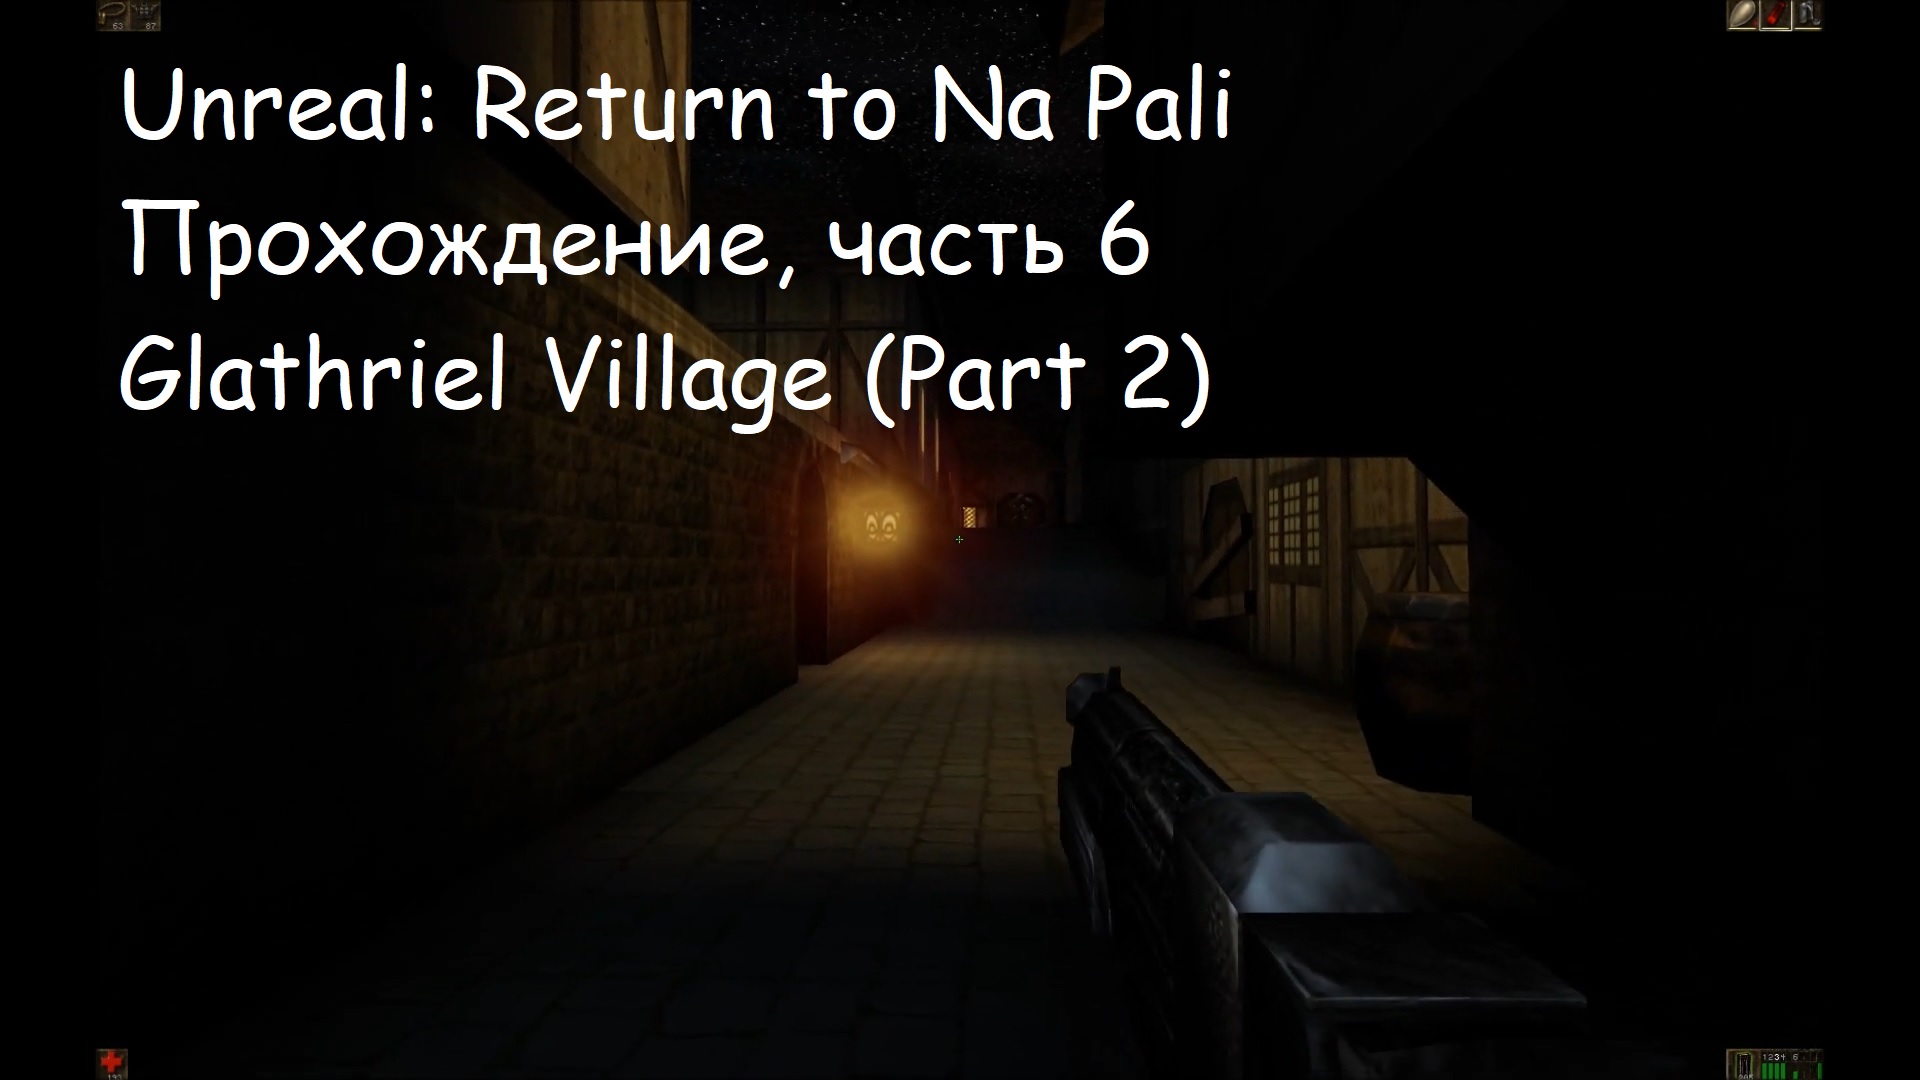 Unreal: Return to Na Pali, Прохождение, часть 6 - Glathriel Village (Part 2)